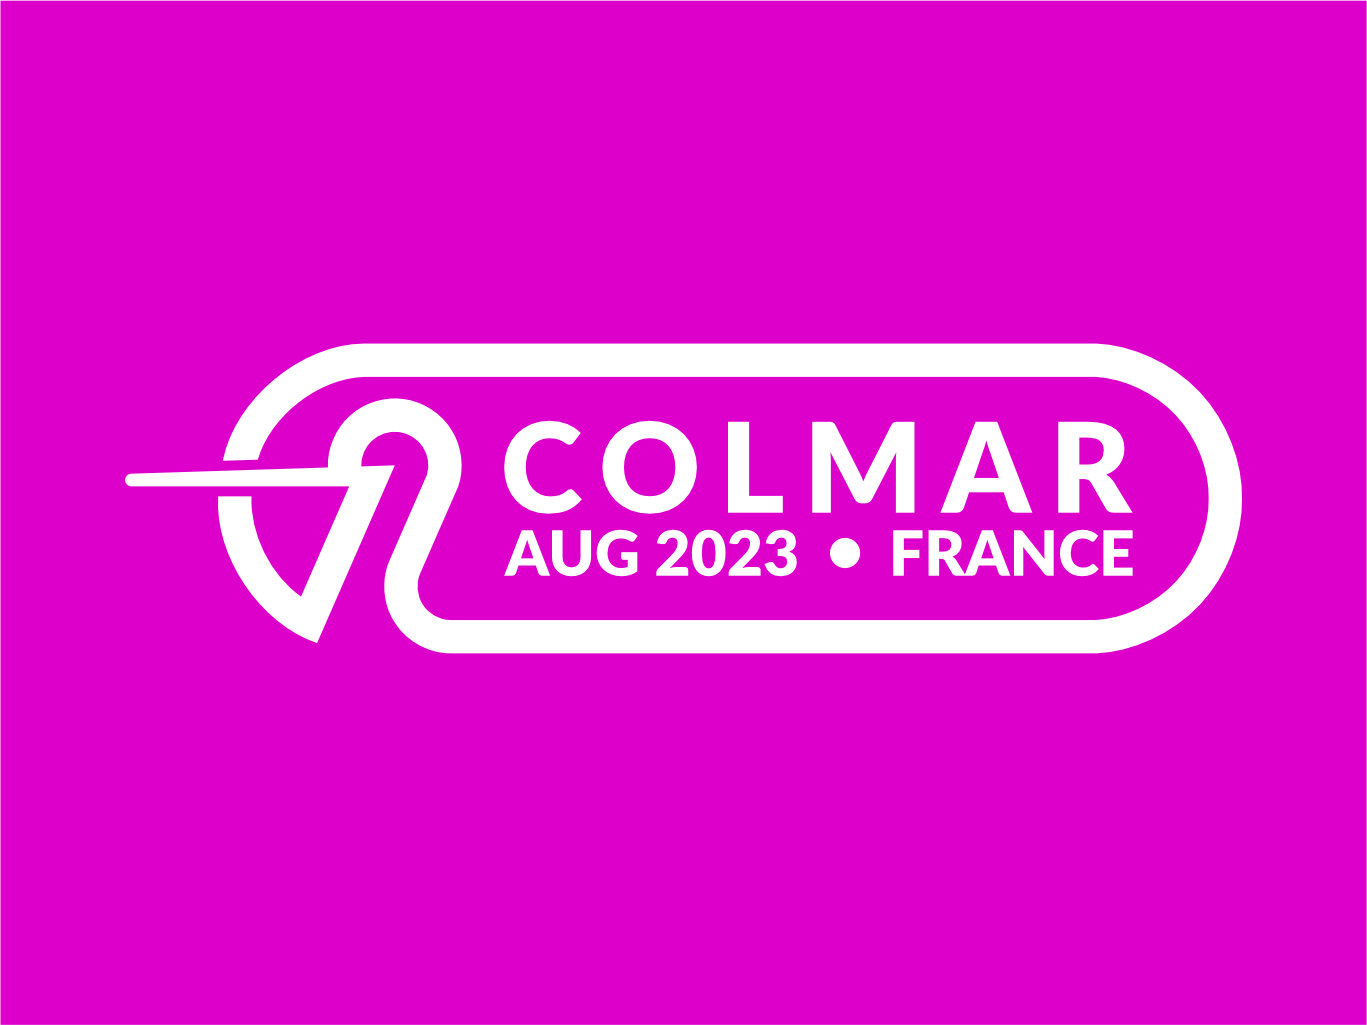 Passport style stamp for Colmar